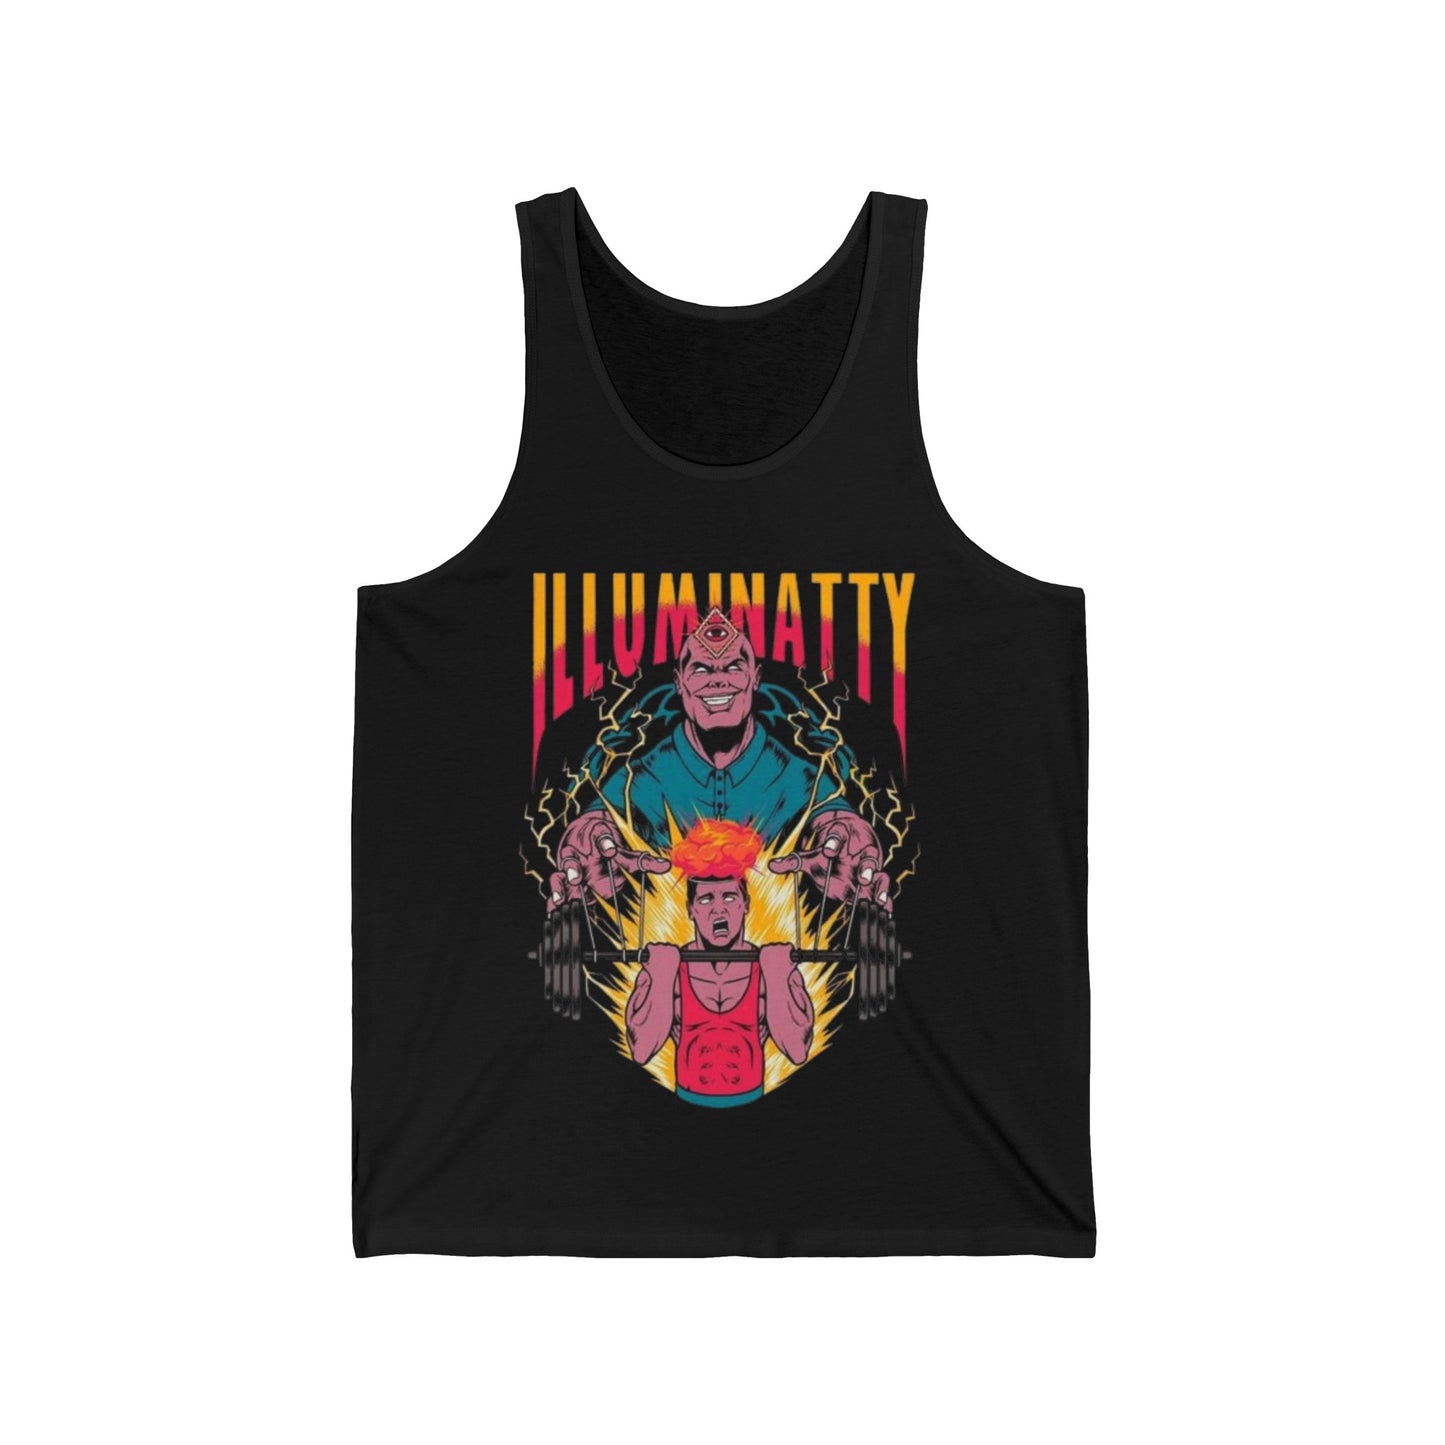 Illuminatty Tank Top - Funny Natty Gym Tanks Black Sleeveless Workout Shirts